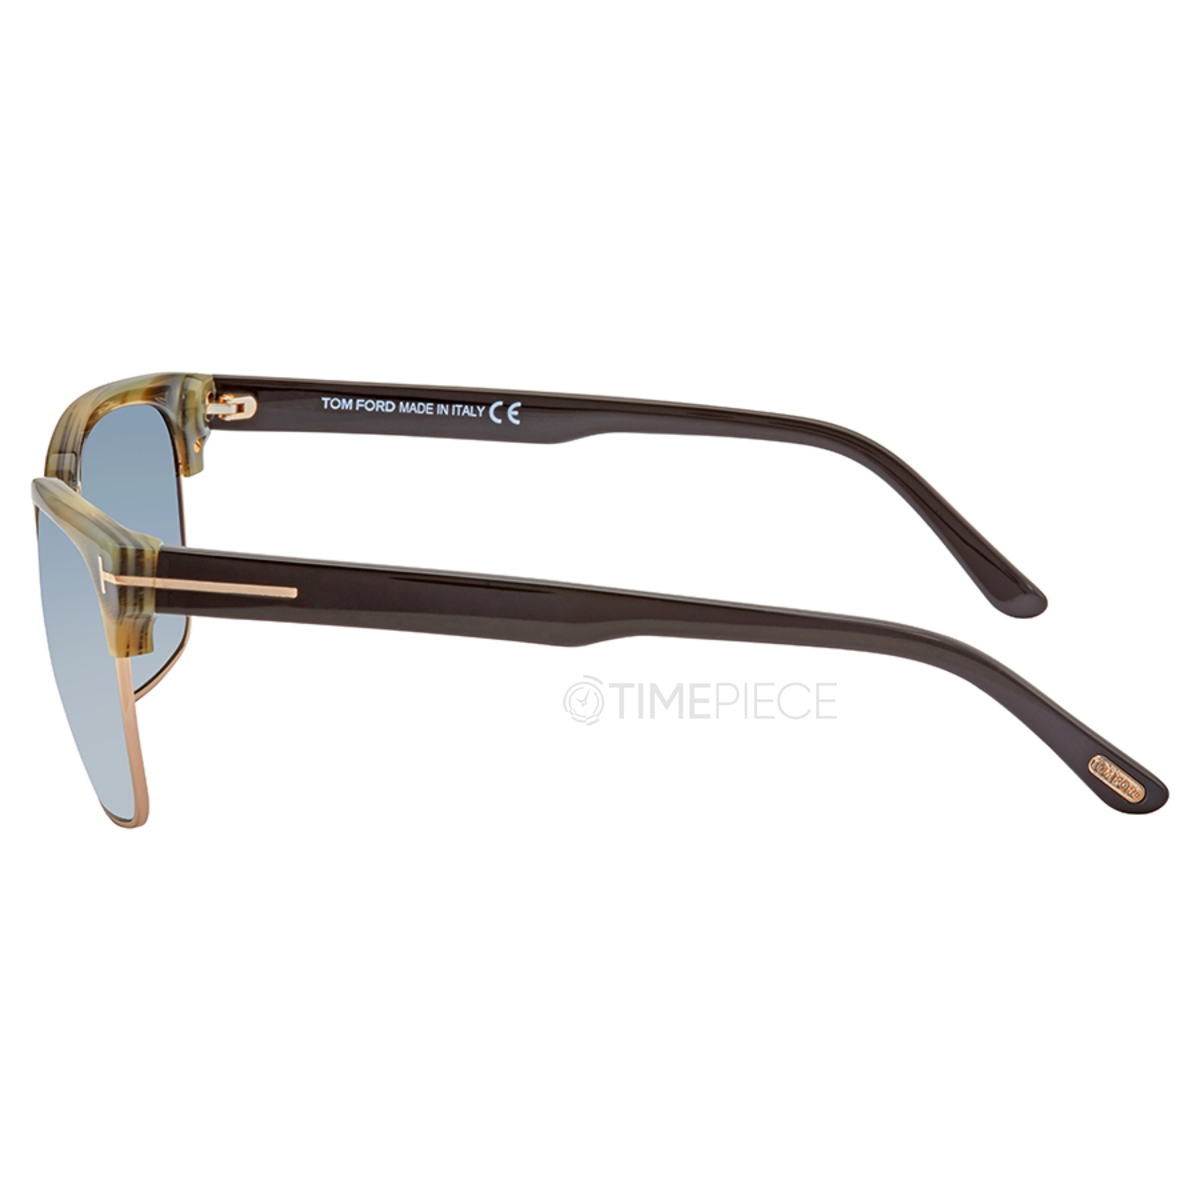 Tom Ford Men's River Polarized Square Sunglasses